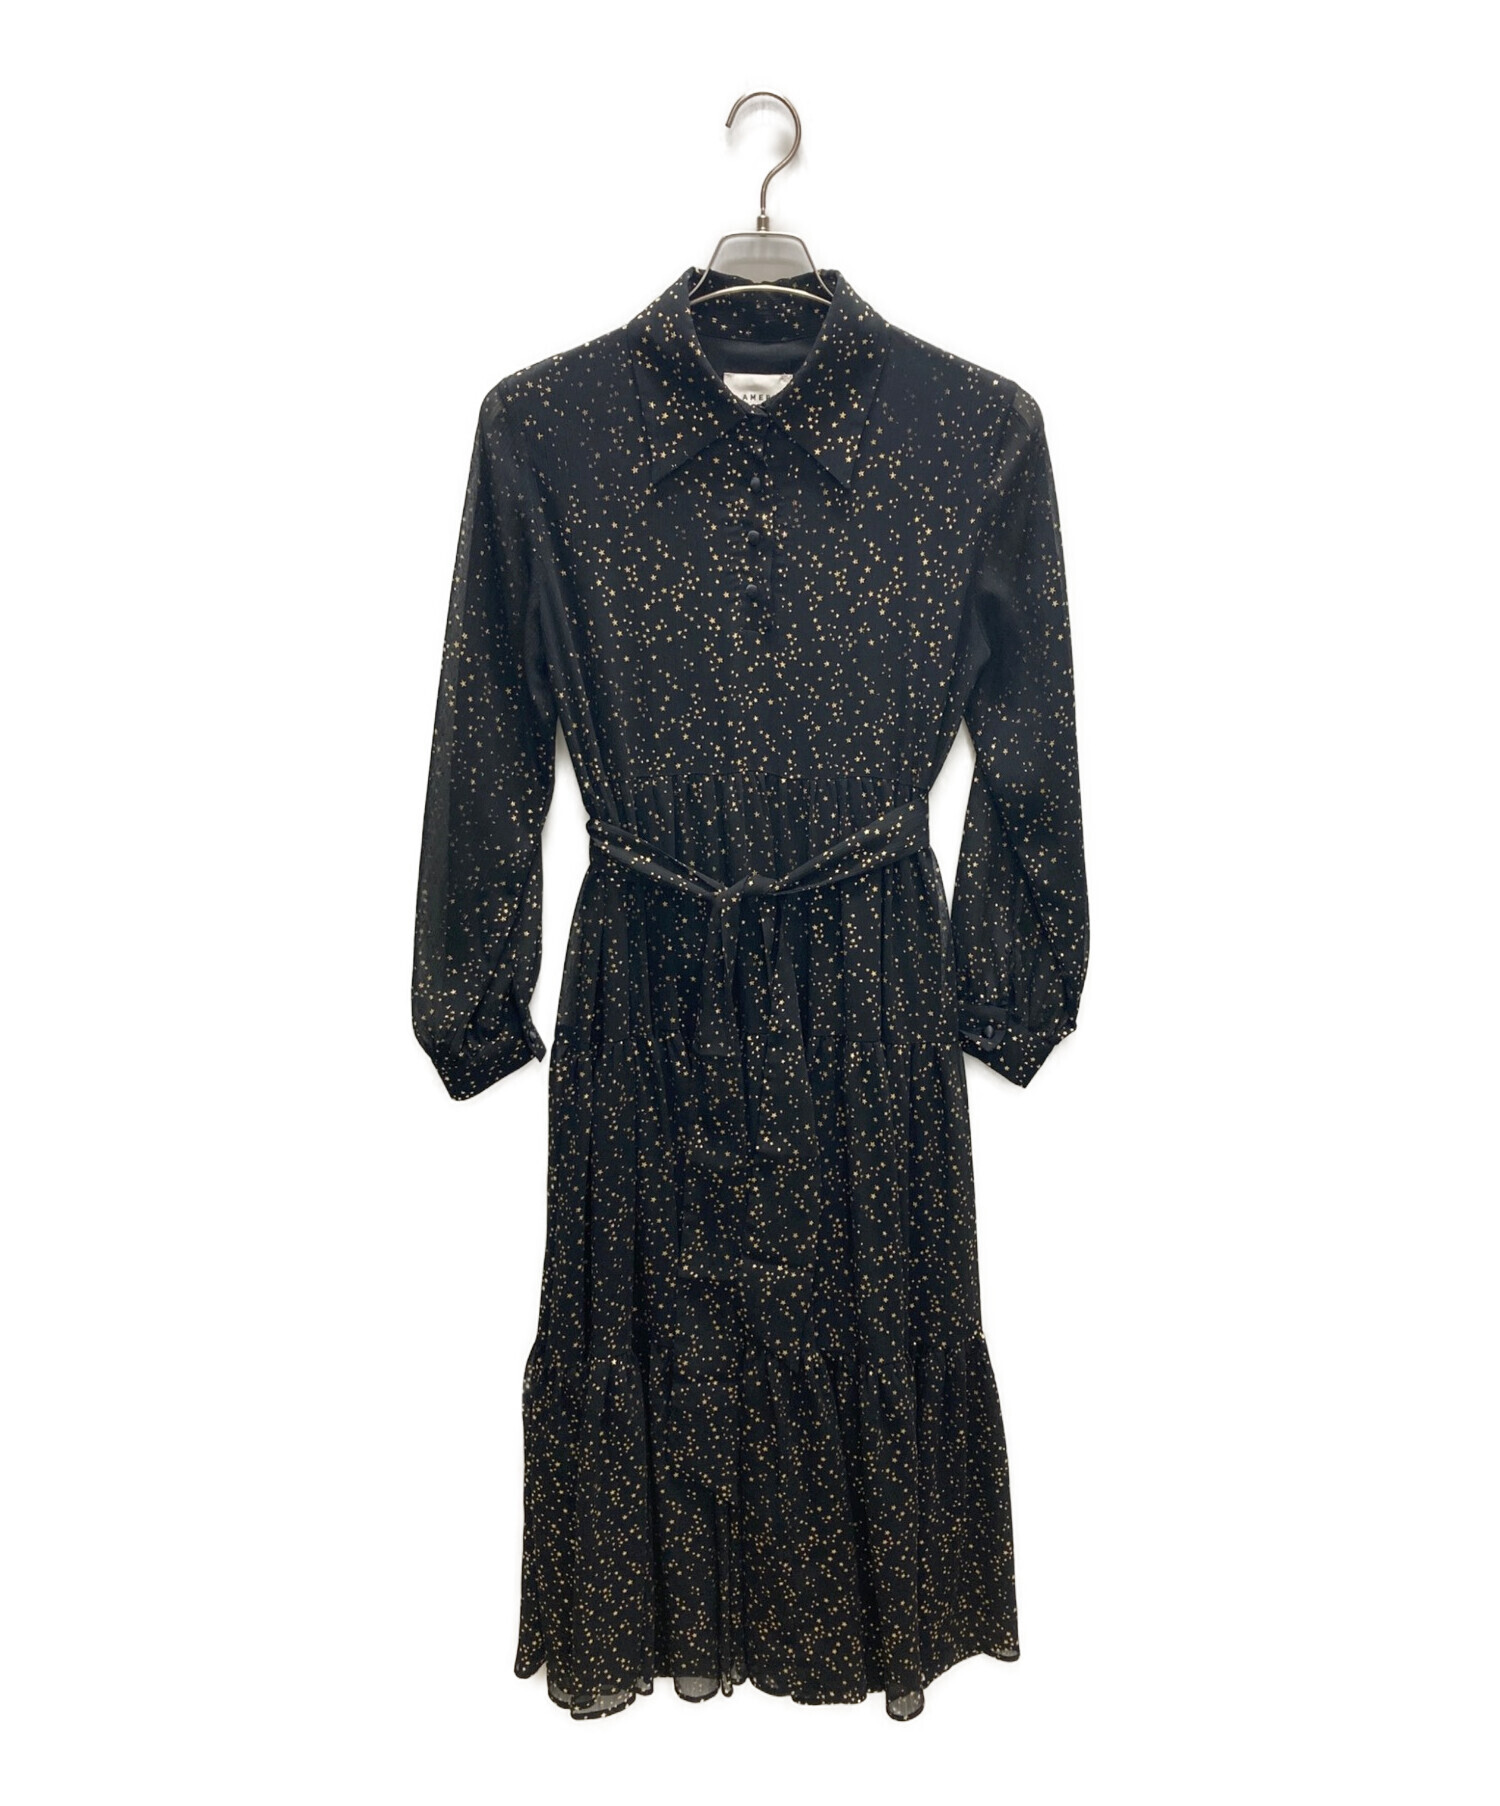 Ameri vintageアメリTWINKLE WIDENING DRESS